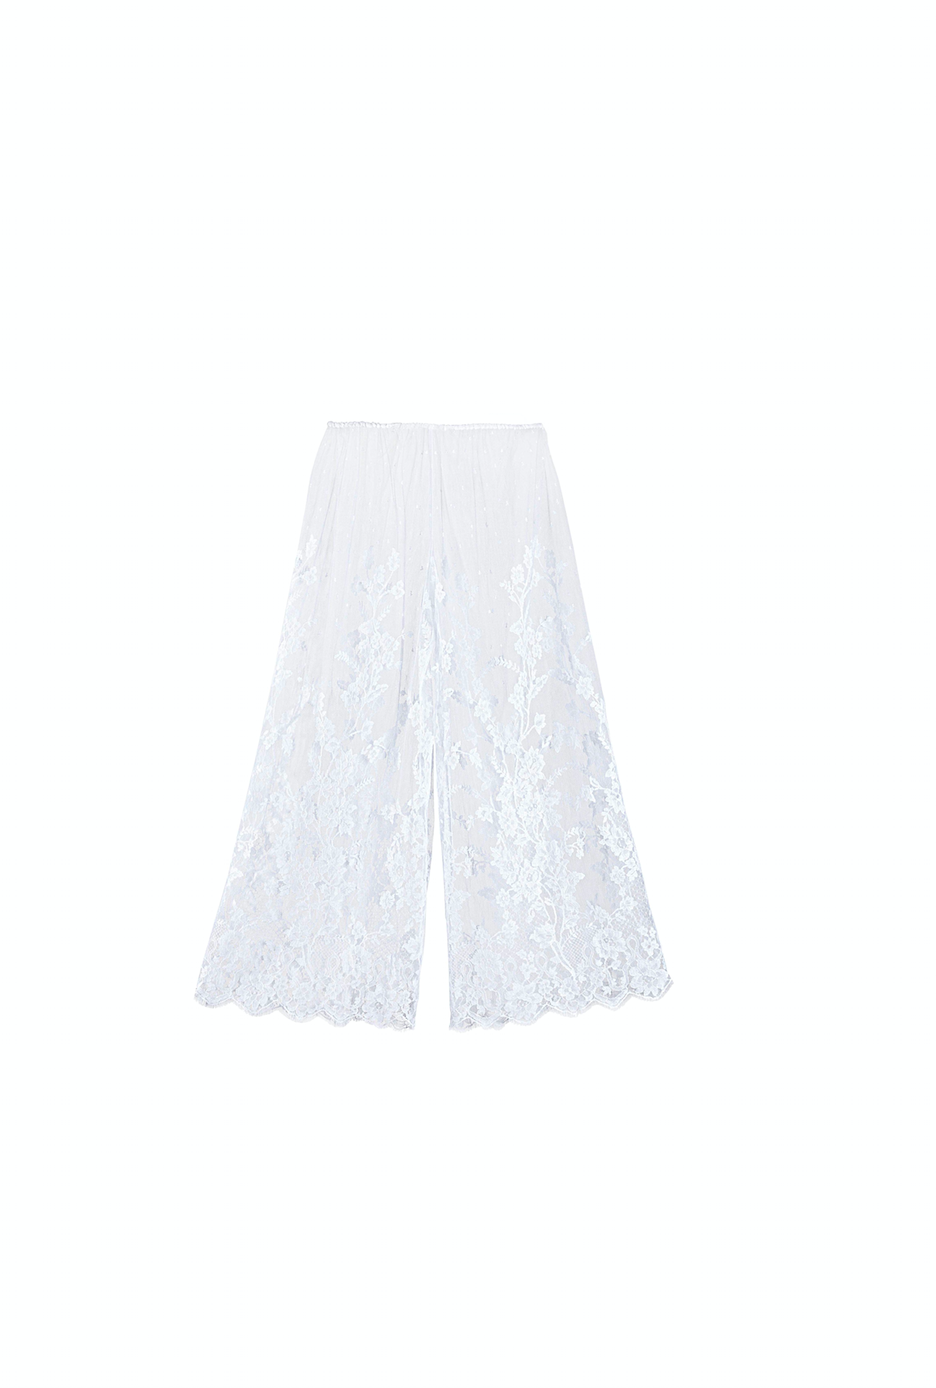 Matrimonio All’Italiana White Lace Trousers